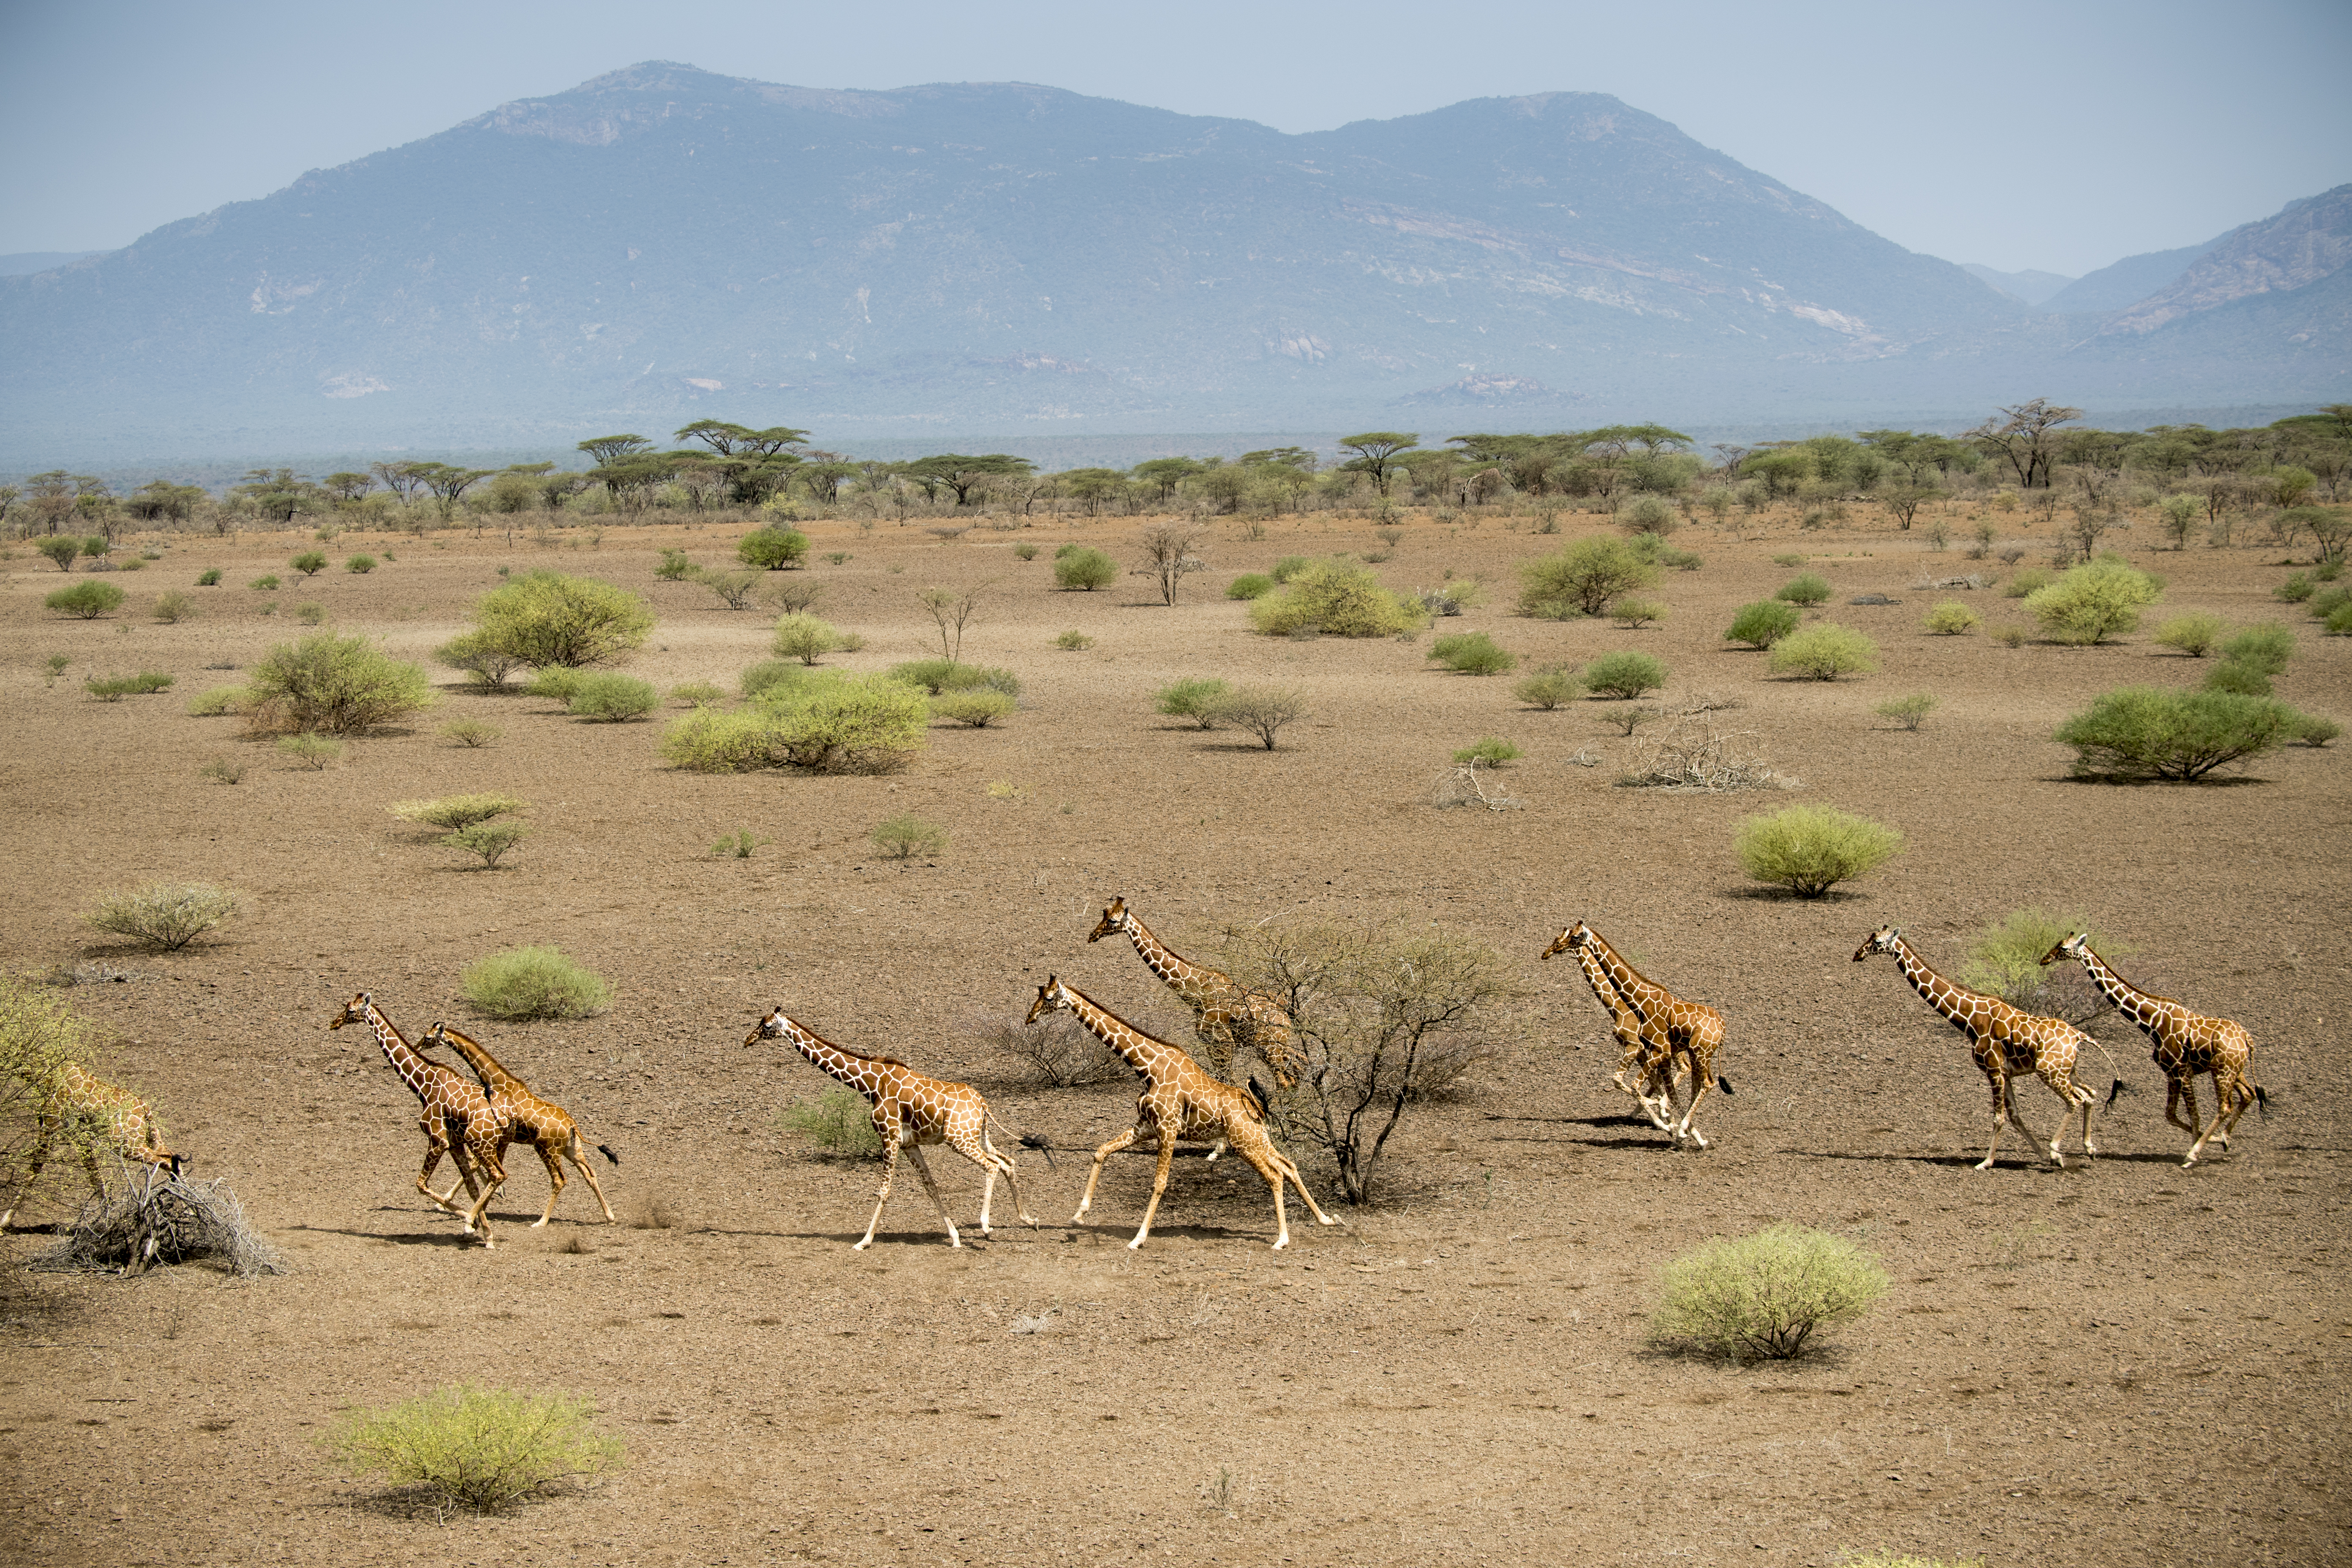 Tower of giraffe in Kenya